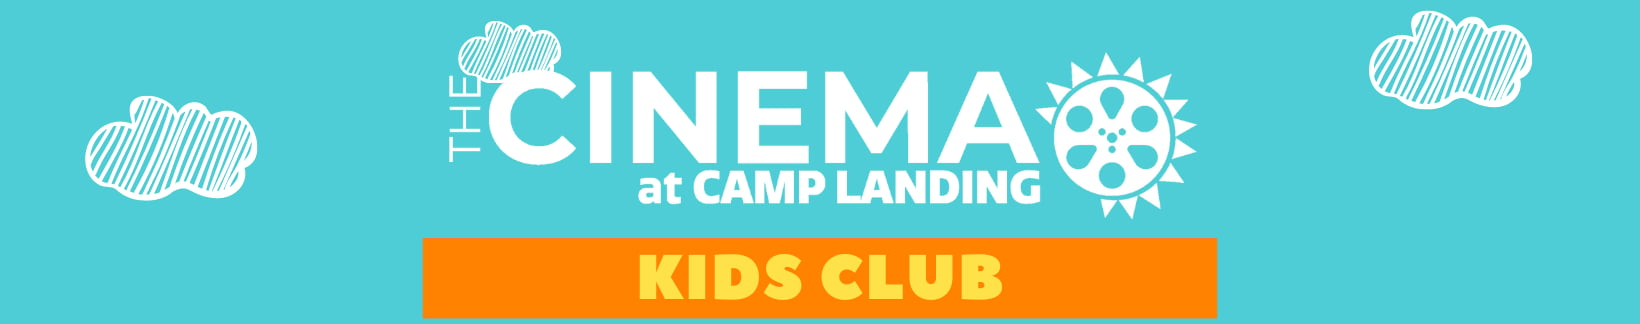 Cinema Kids Club